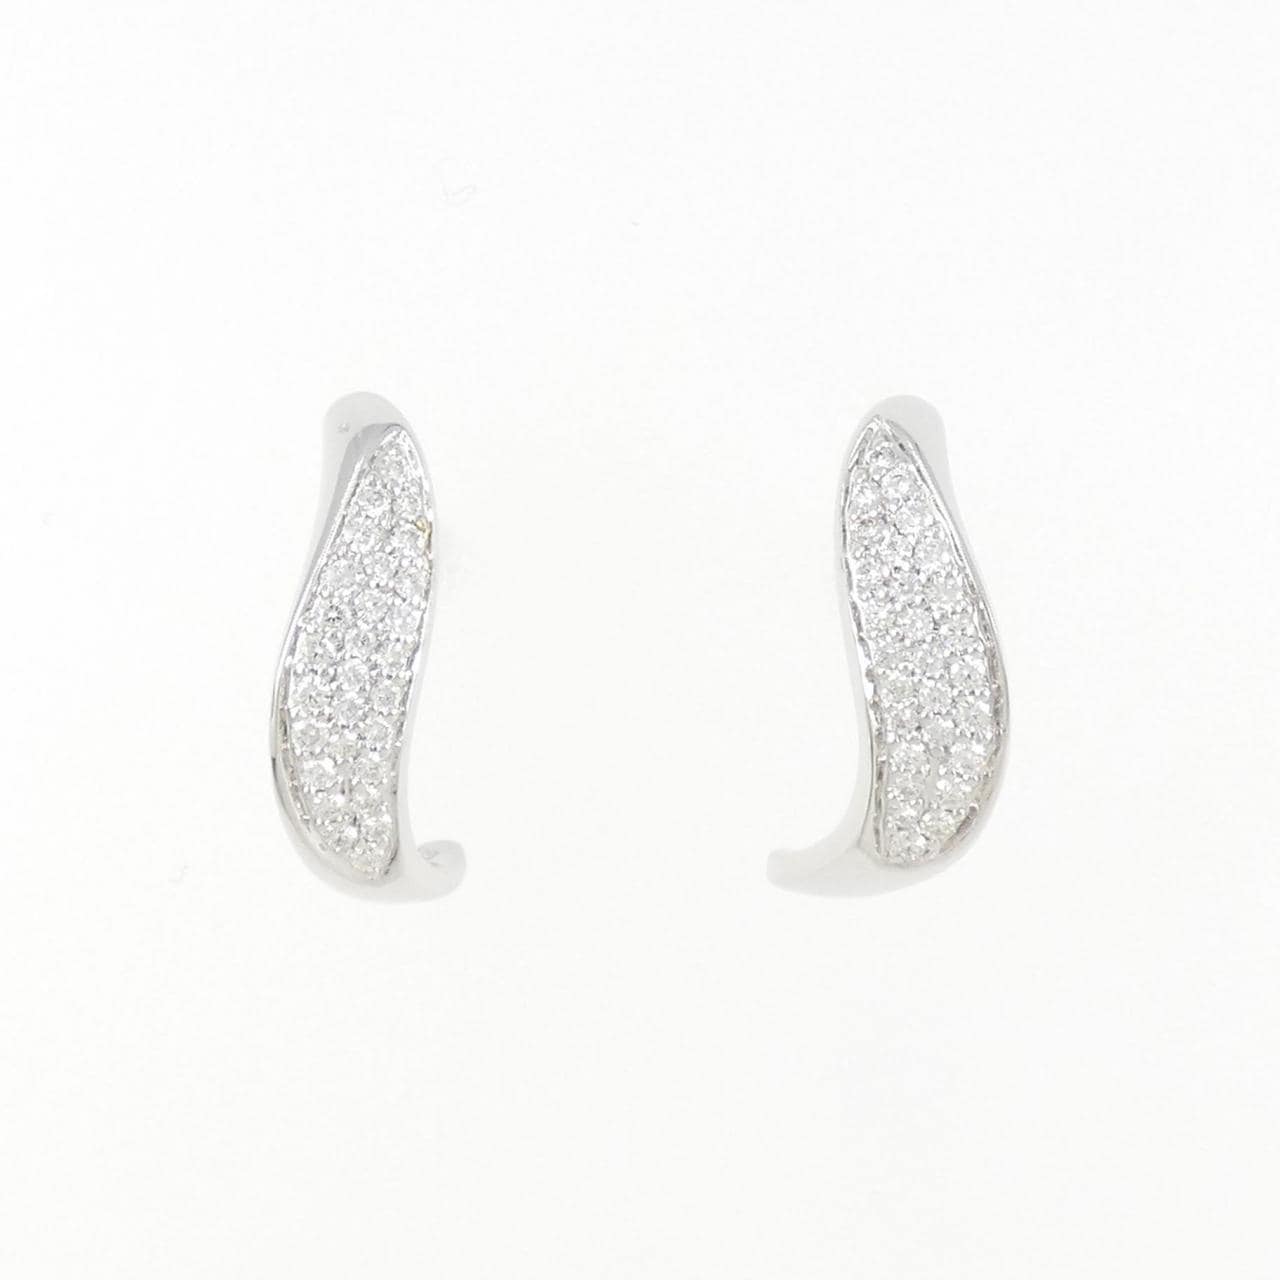 750WG Diamond earrings 0.18CT